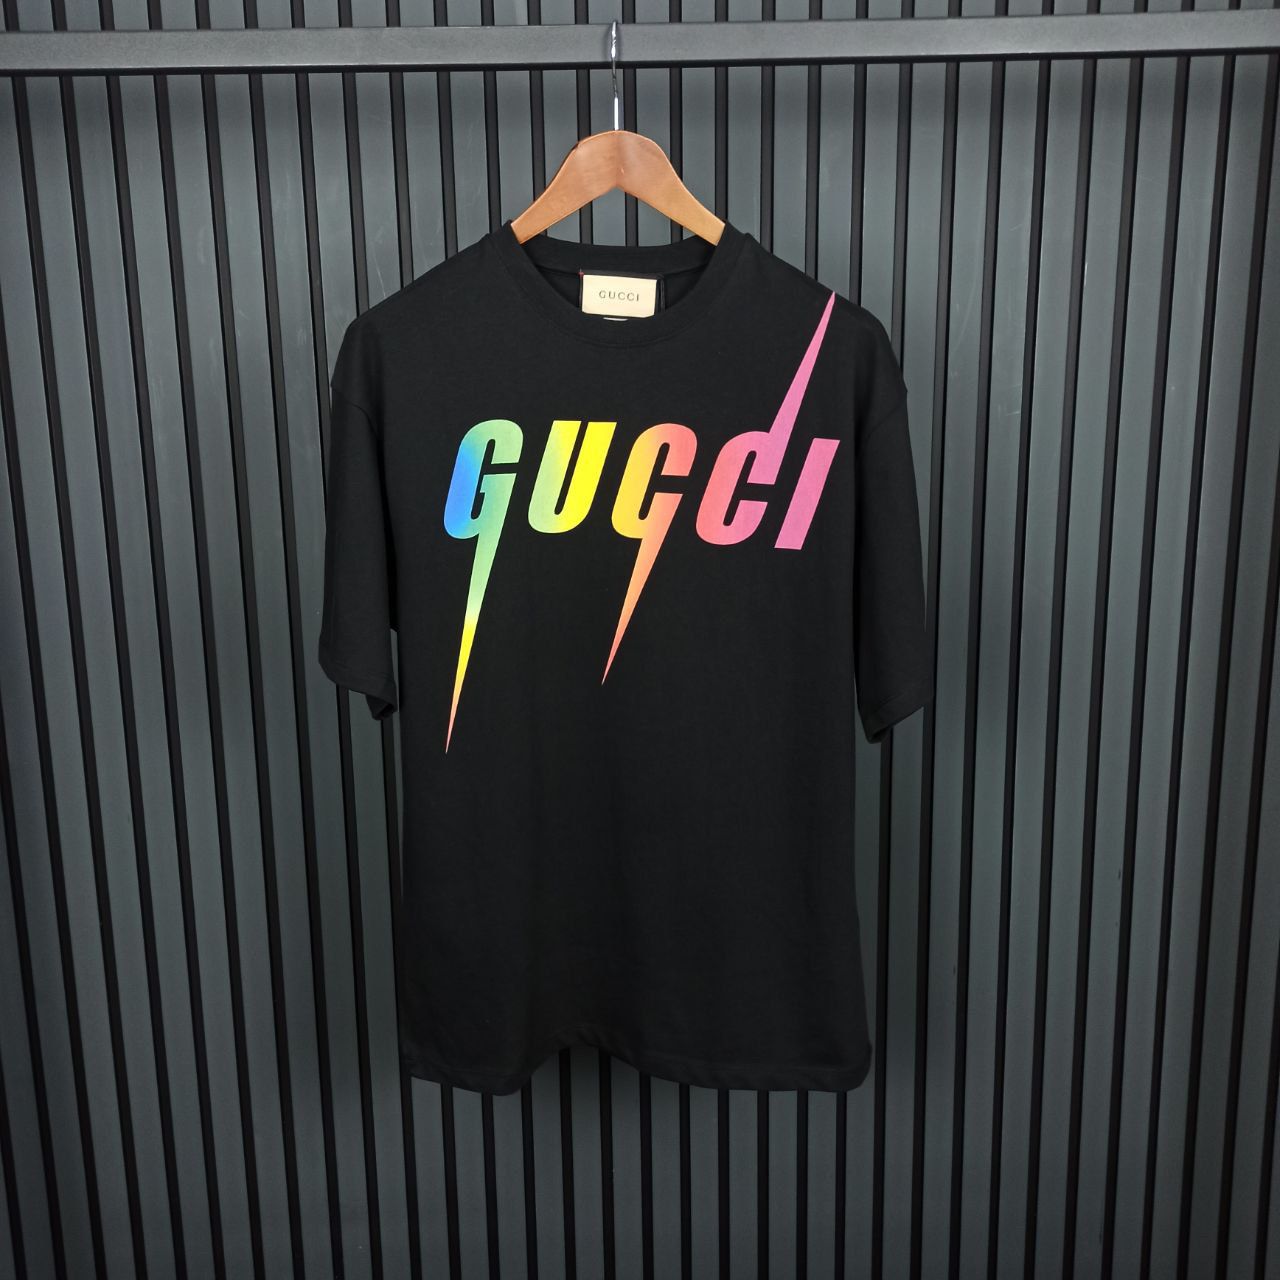 New Gucci t-shirt 